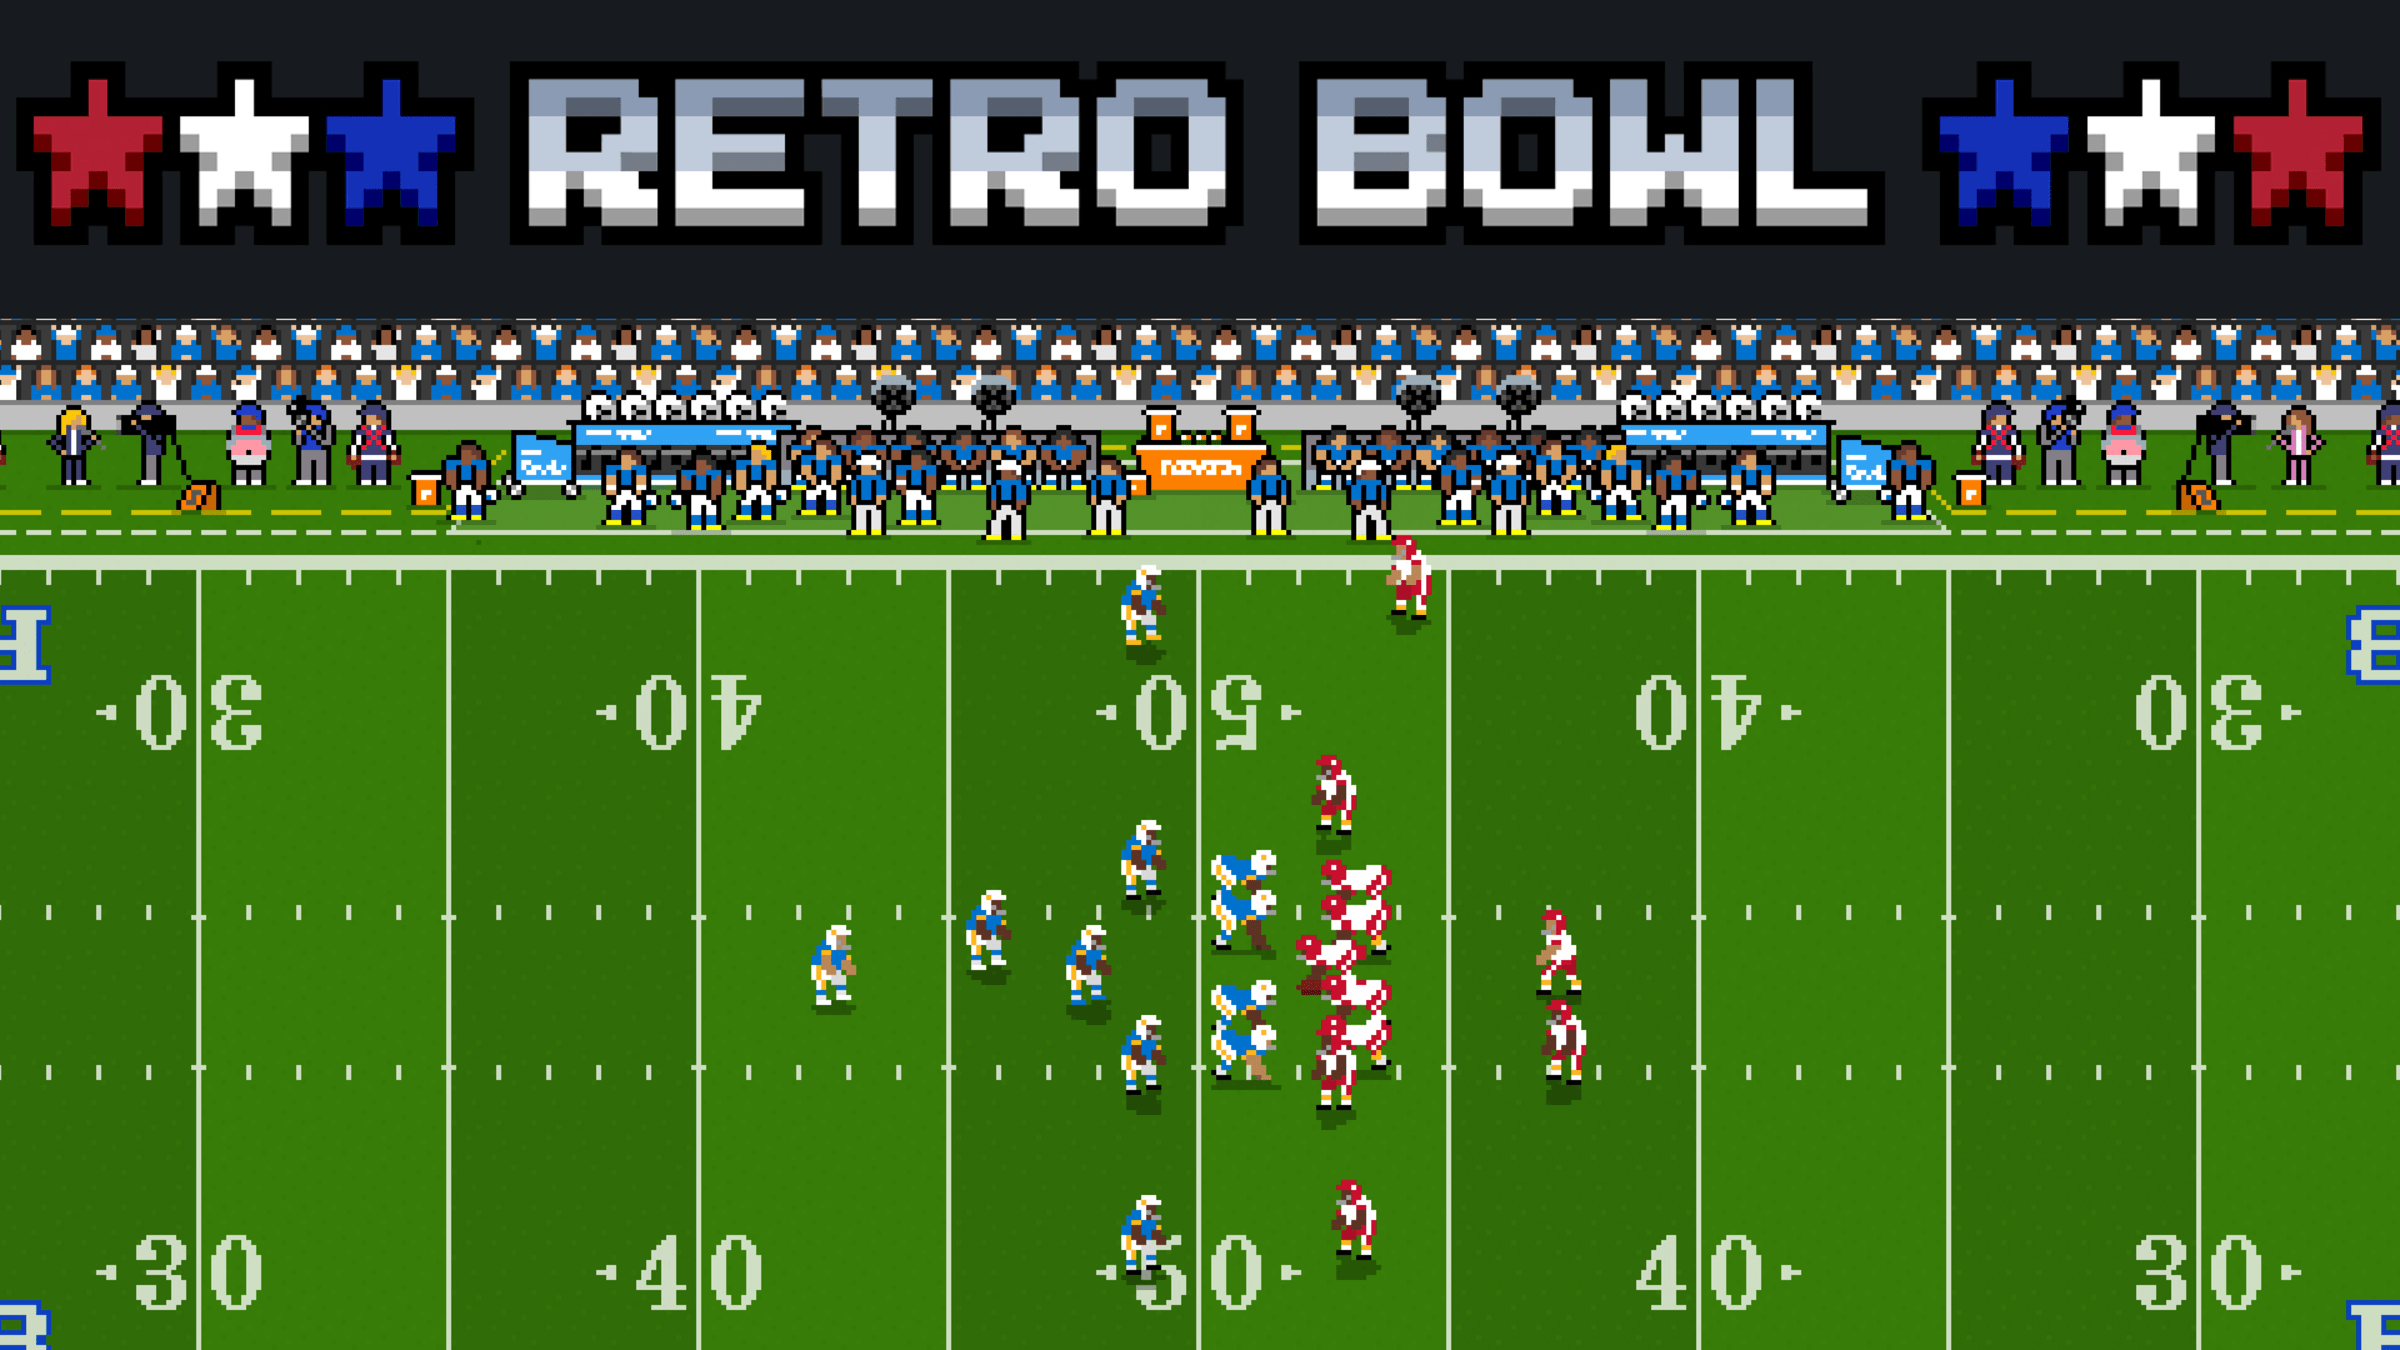 Retro Bowl image